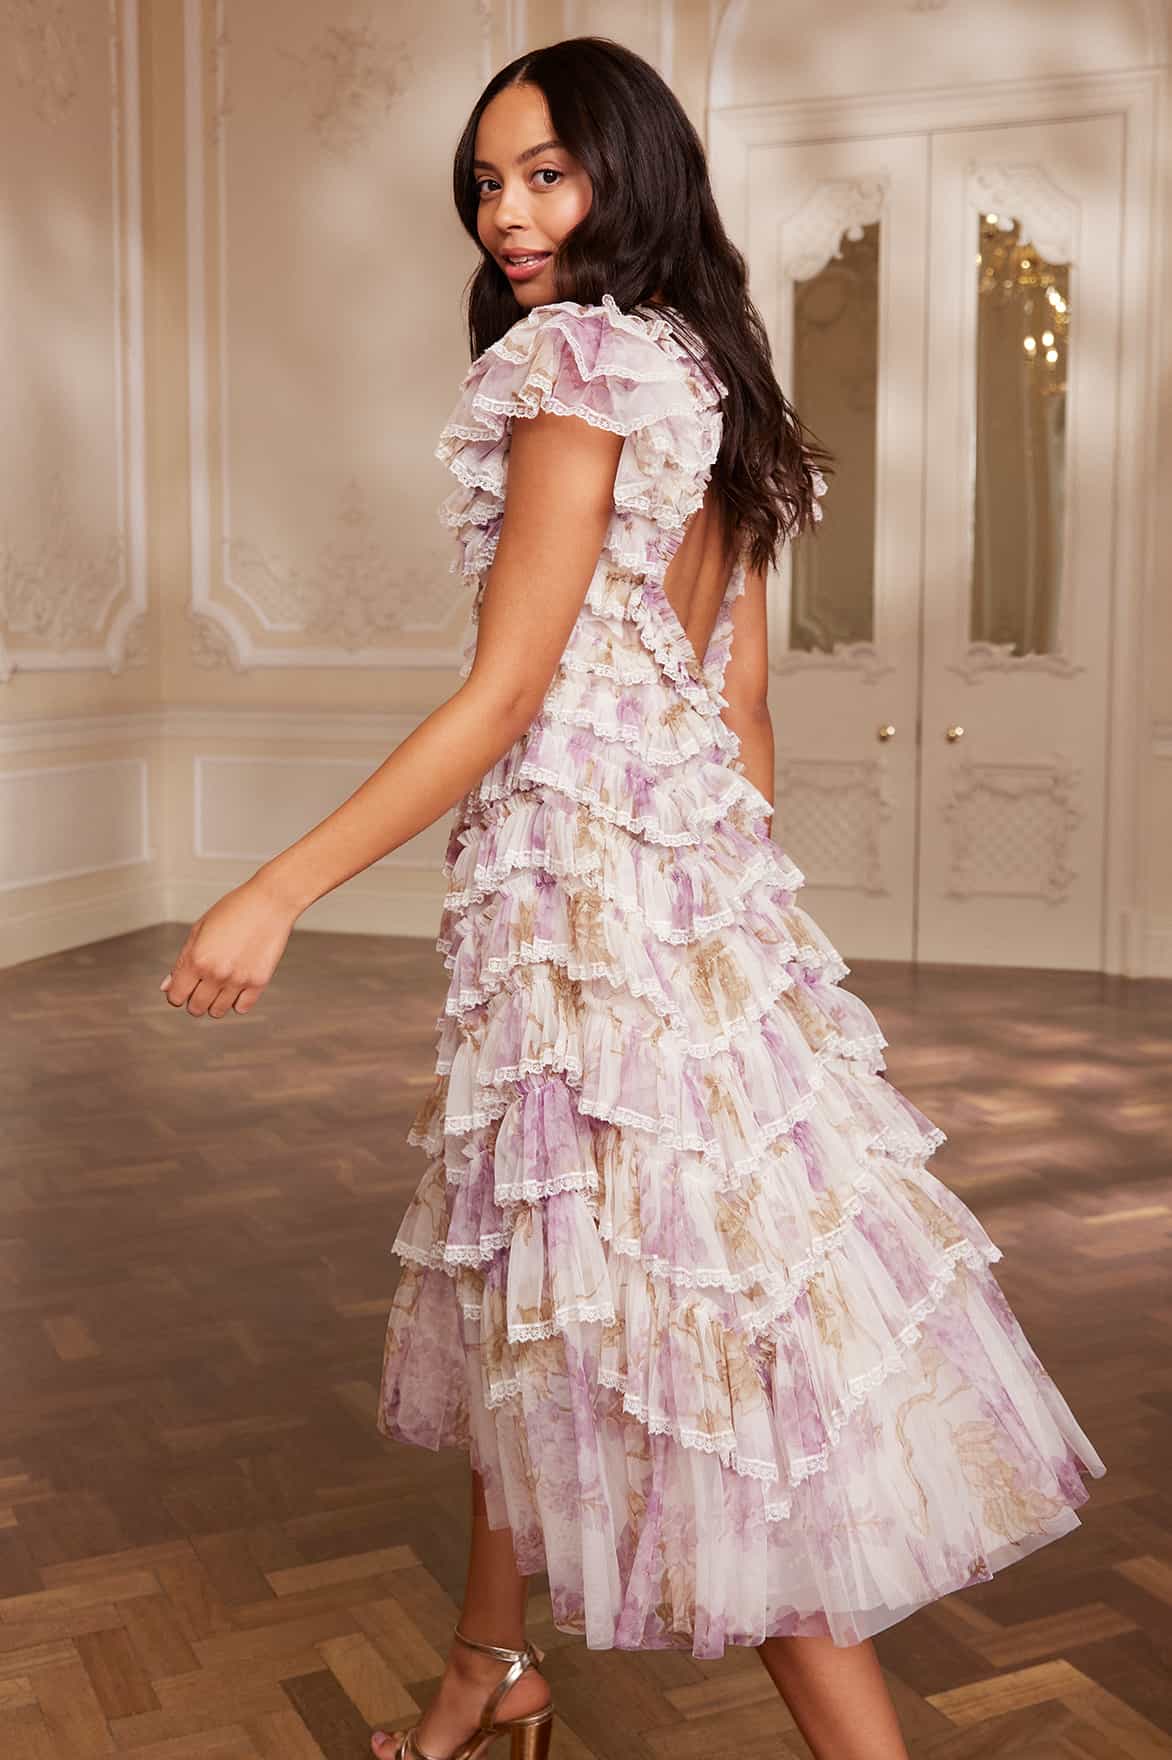 Wisteria Ruffle Lace Ballerina Dress – Multi